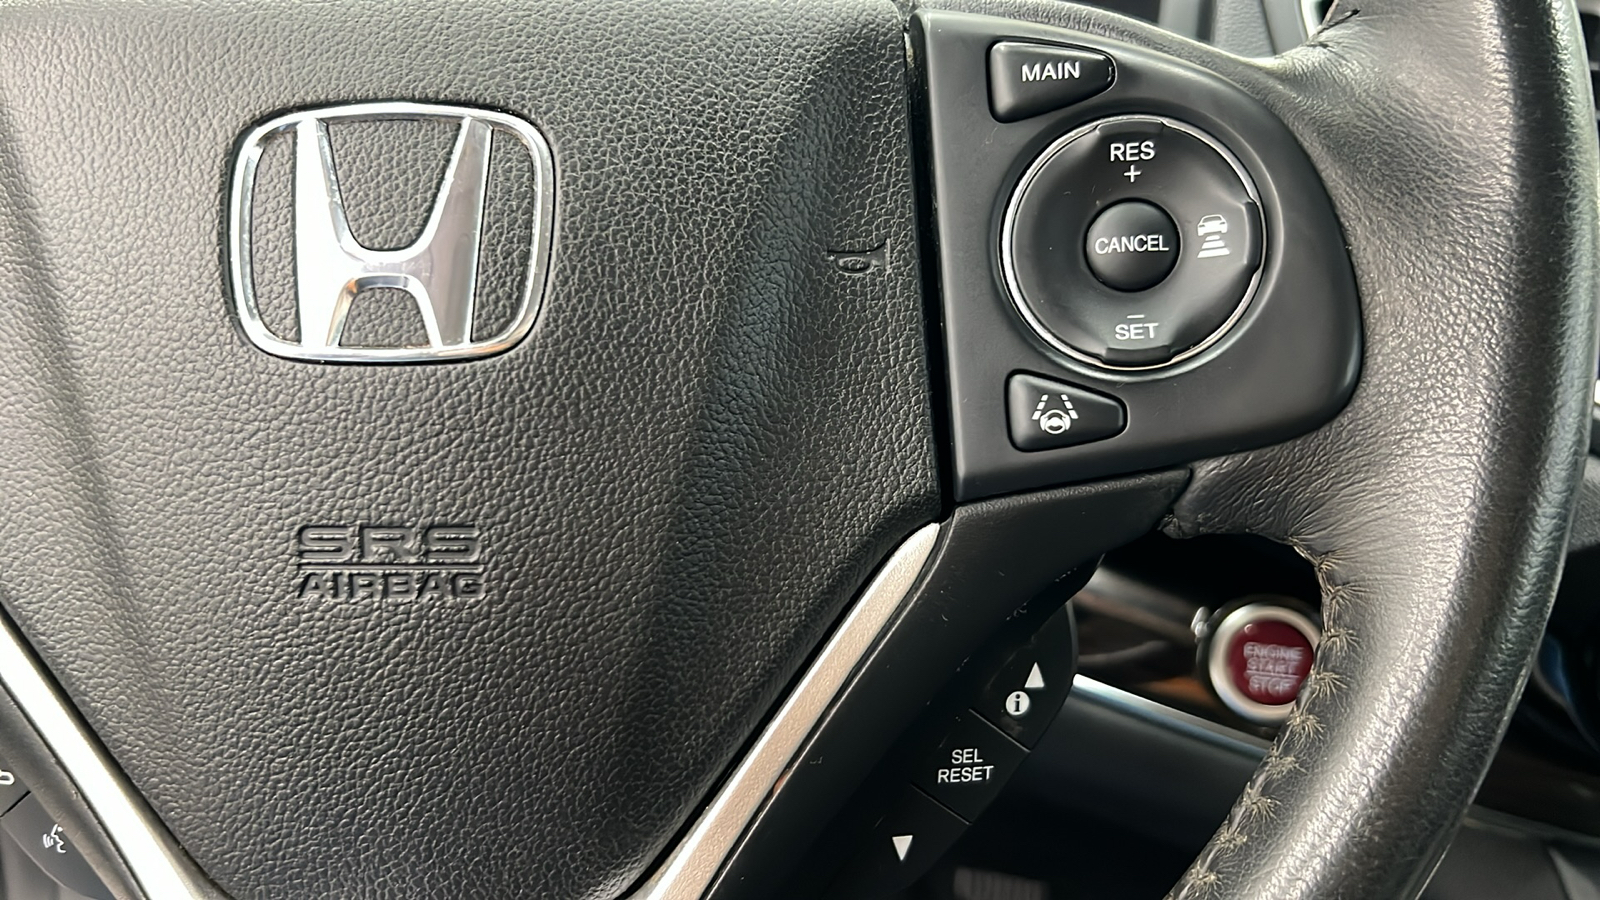 2016 Honda CR-V Touring 25